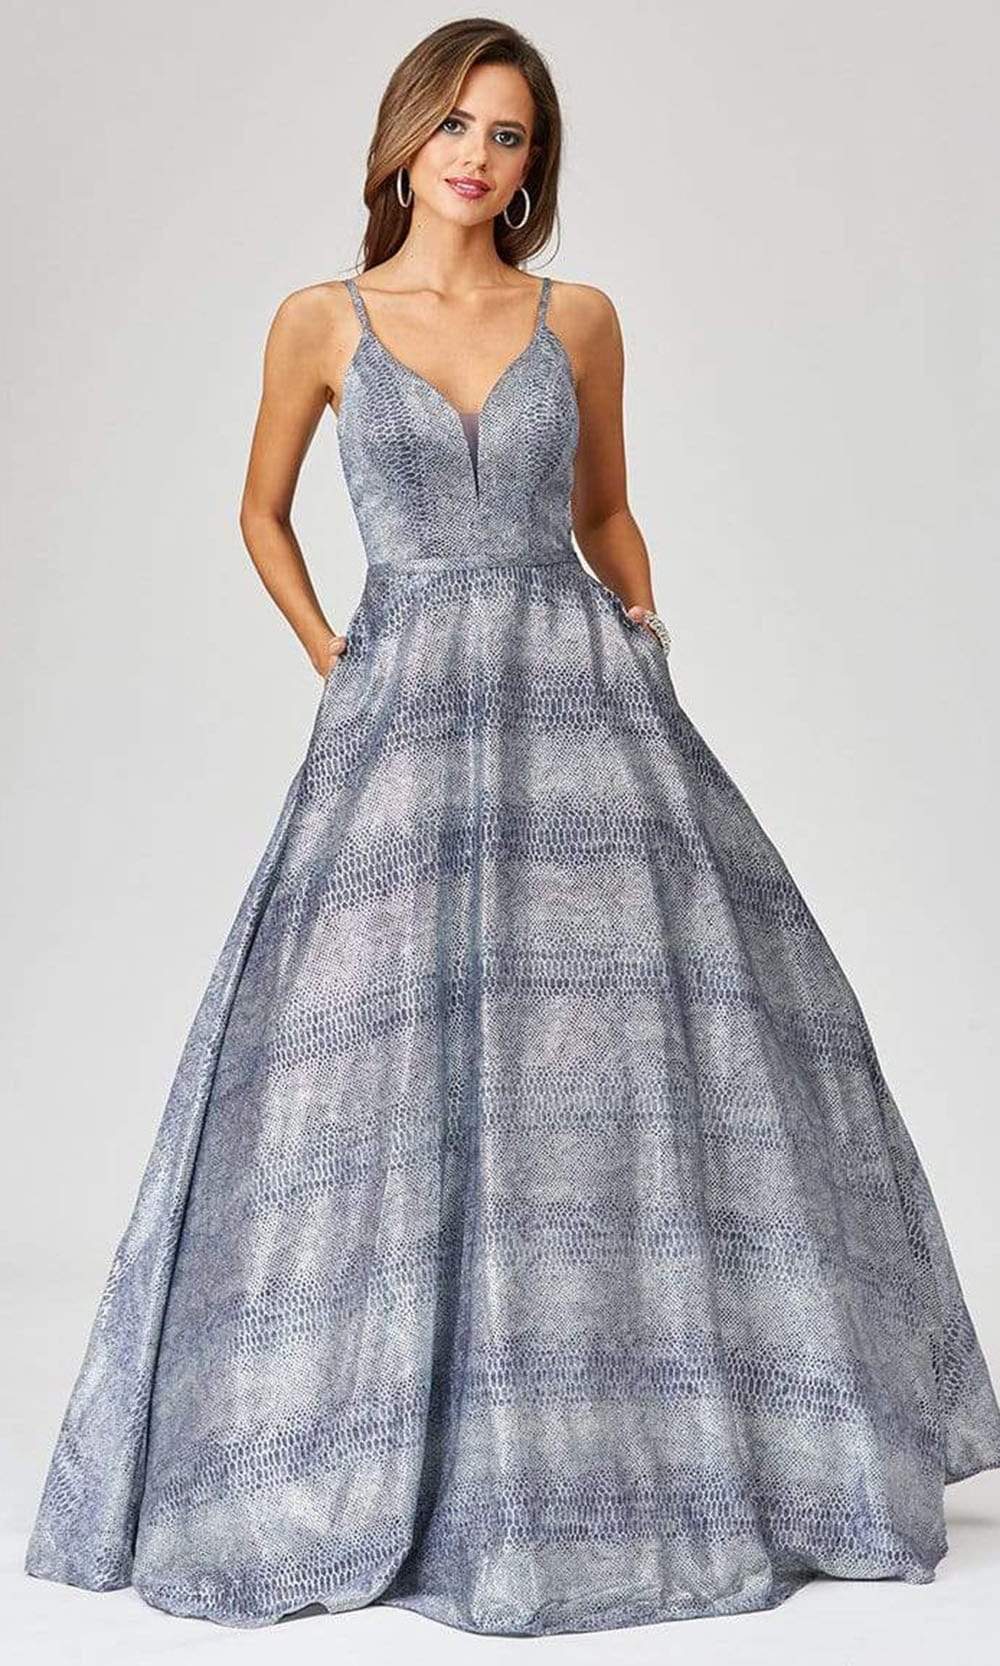 Lara Dresses - 29462 Sleeveless Deep V Neck Ballgown Prom Dresses